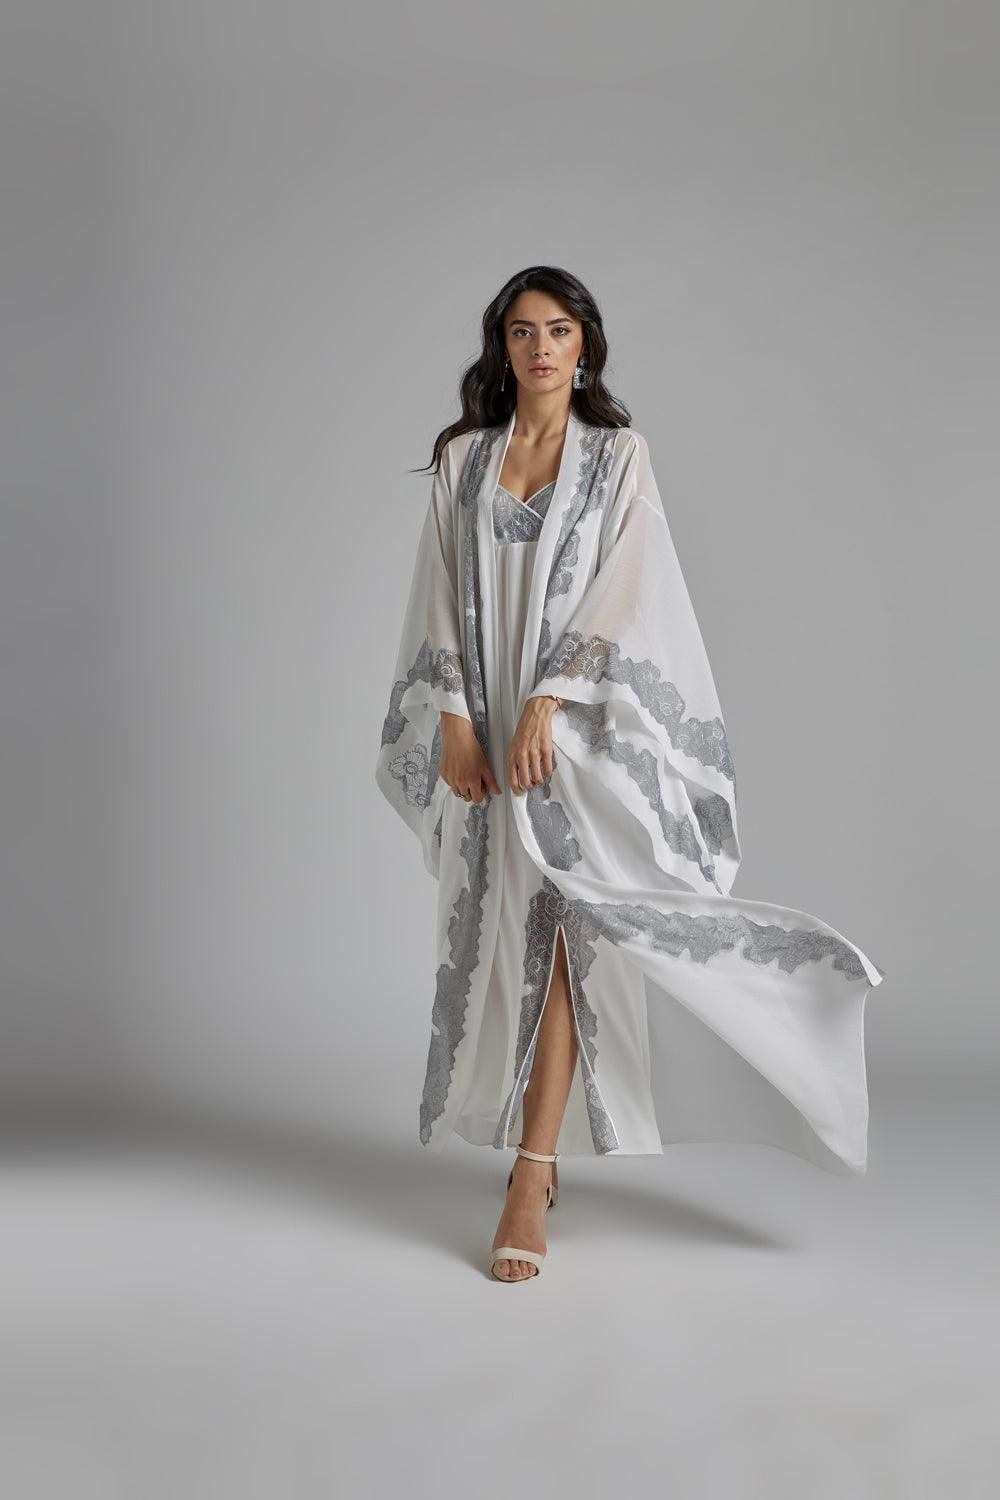 Silk Chiffon Off White Robe Set - Femme Belle - Bocan